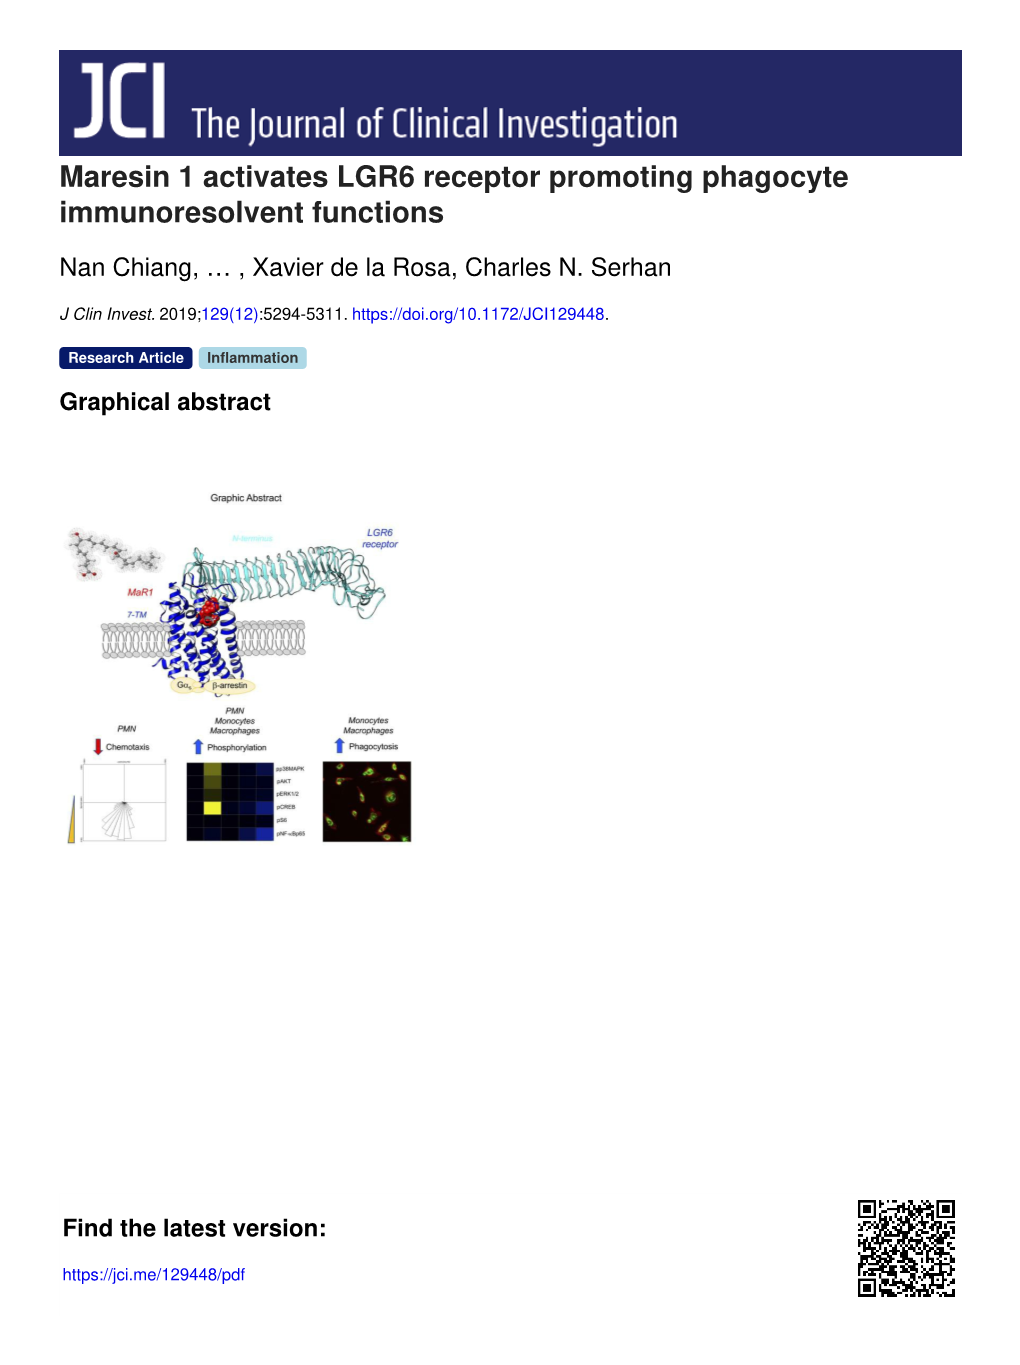 Maresin 1 Activates LGR6 Receptor Promoting Phagocyte Immunoresolvent Functions